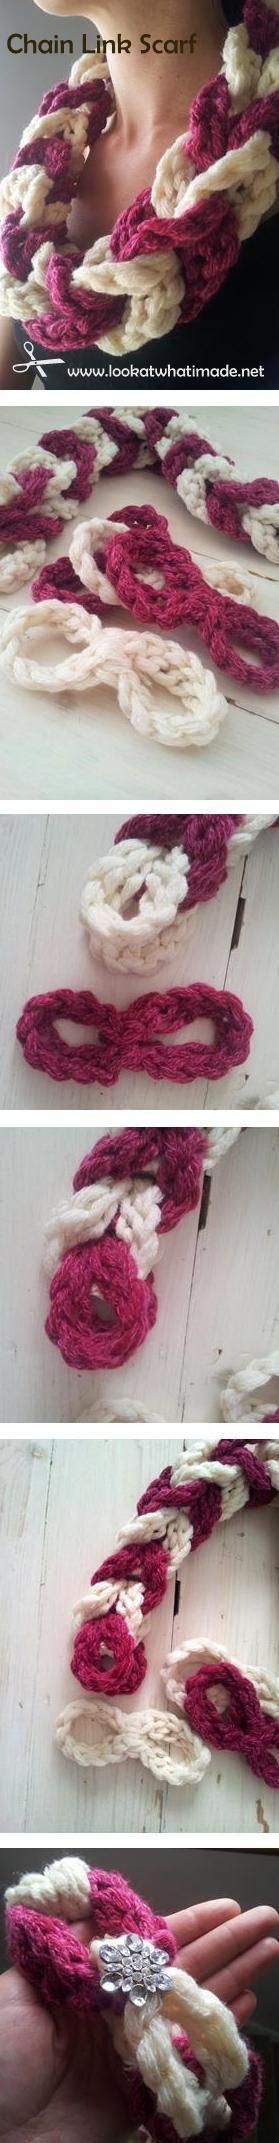 Crochet Chain Link Scarf Crochet Ch